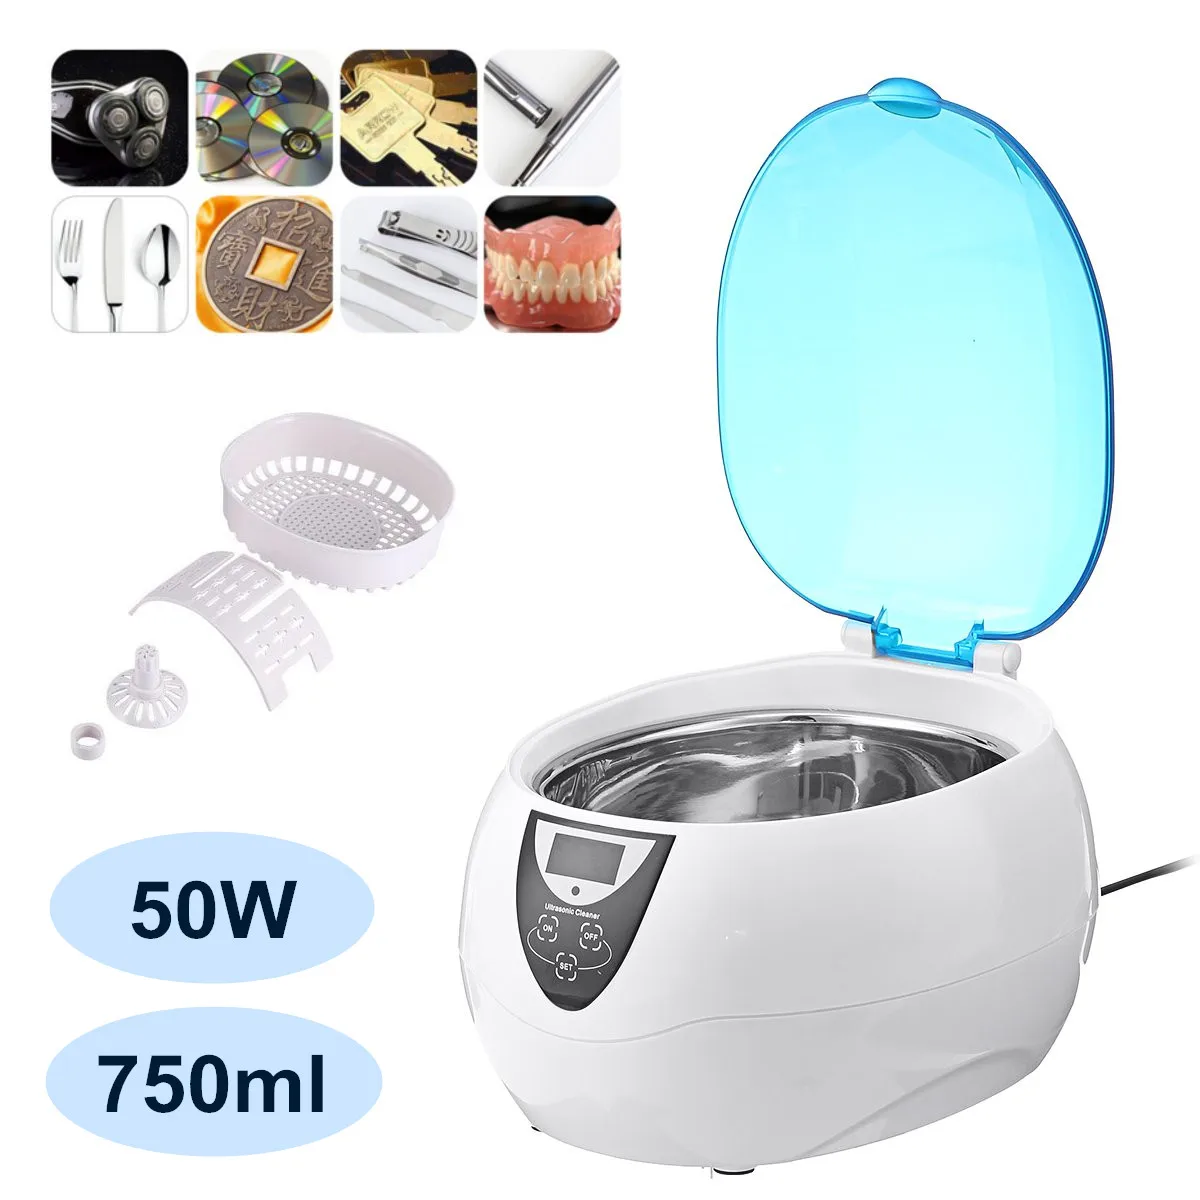 

50W 750ml Ultrasonic Cleaner Bath Jewelry Parts Glasses Manicure Stones Cutters Dental Razor Brush Ultrasound Sonic Cleaner